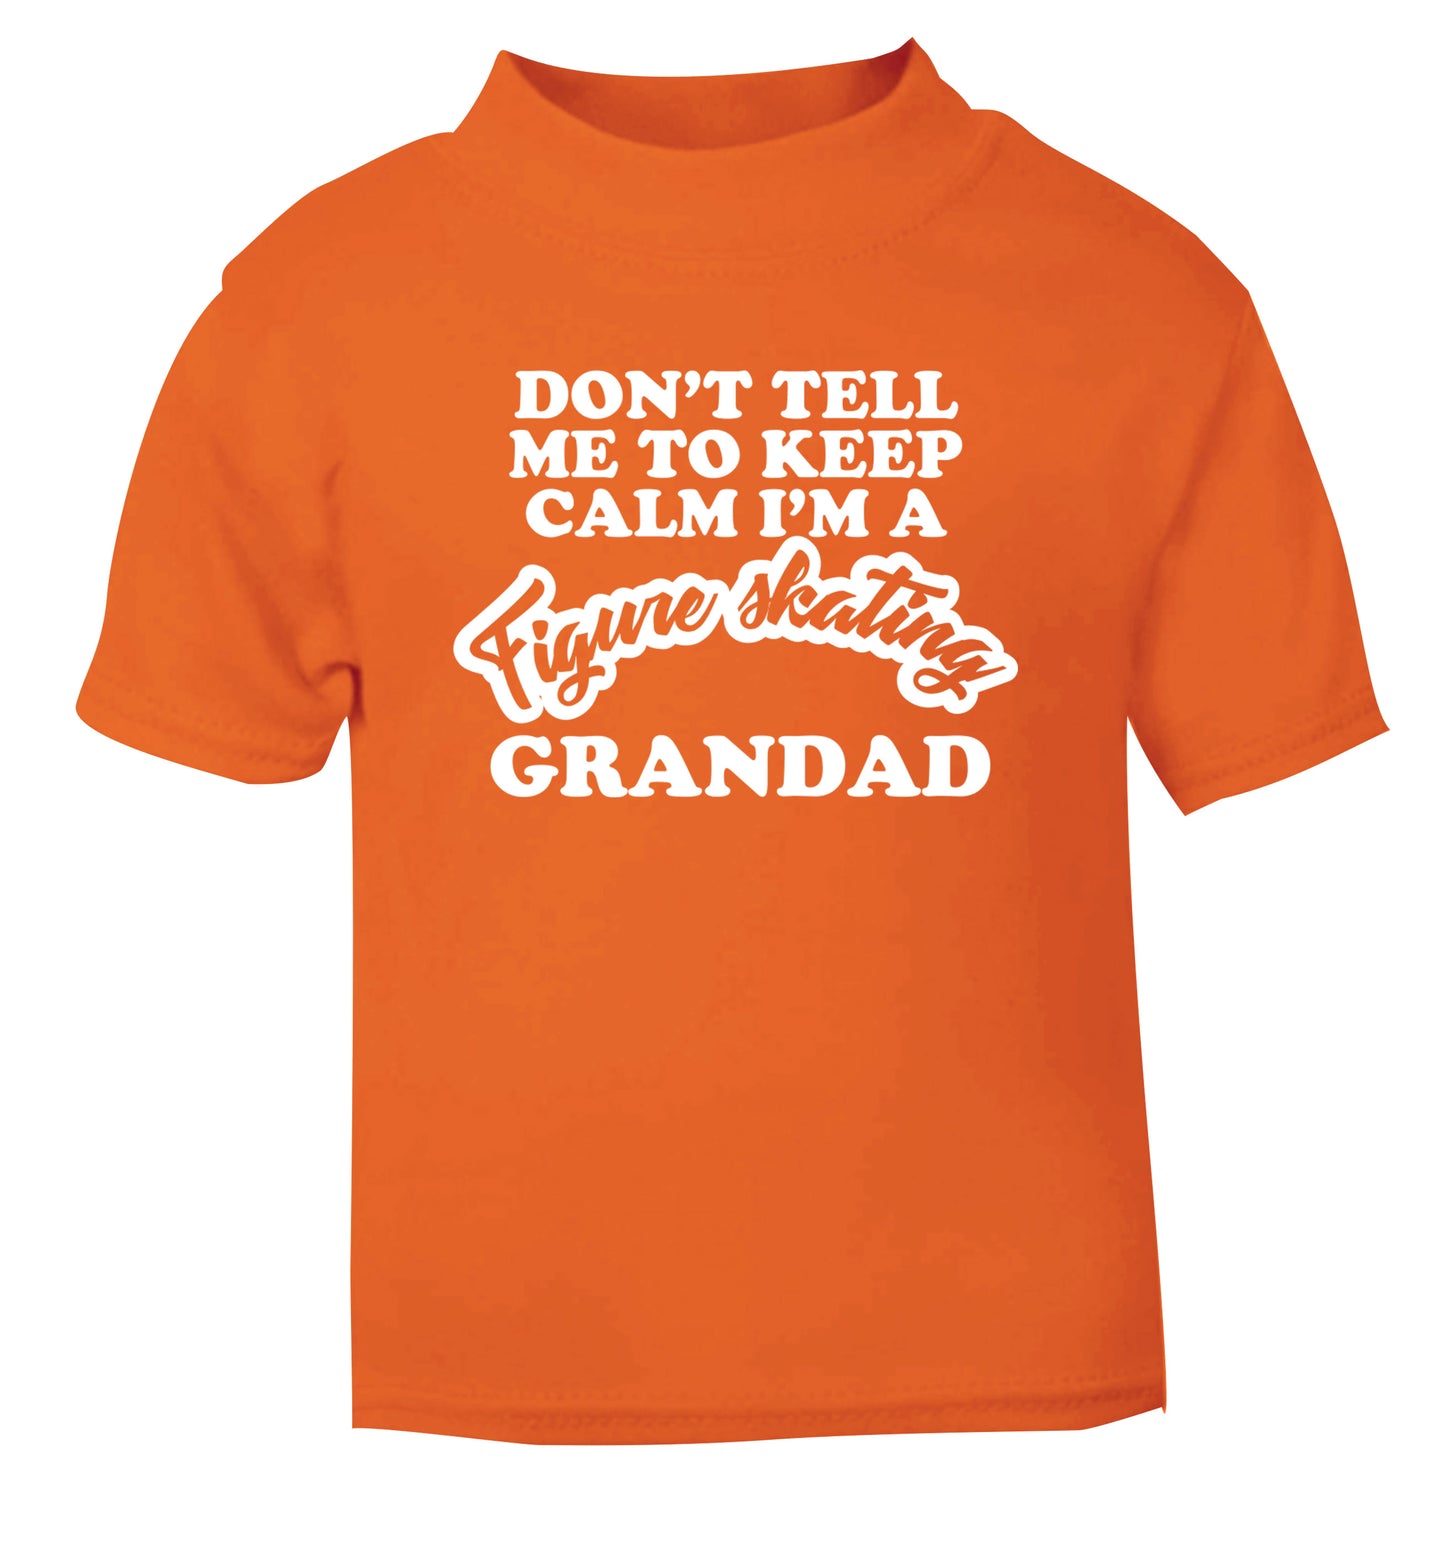 Don't tell me to keep calm I'm a figure skating grandad orange Baby Toddler Tshirt 2 Years